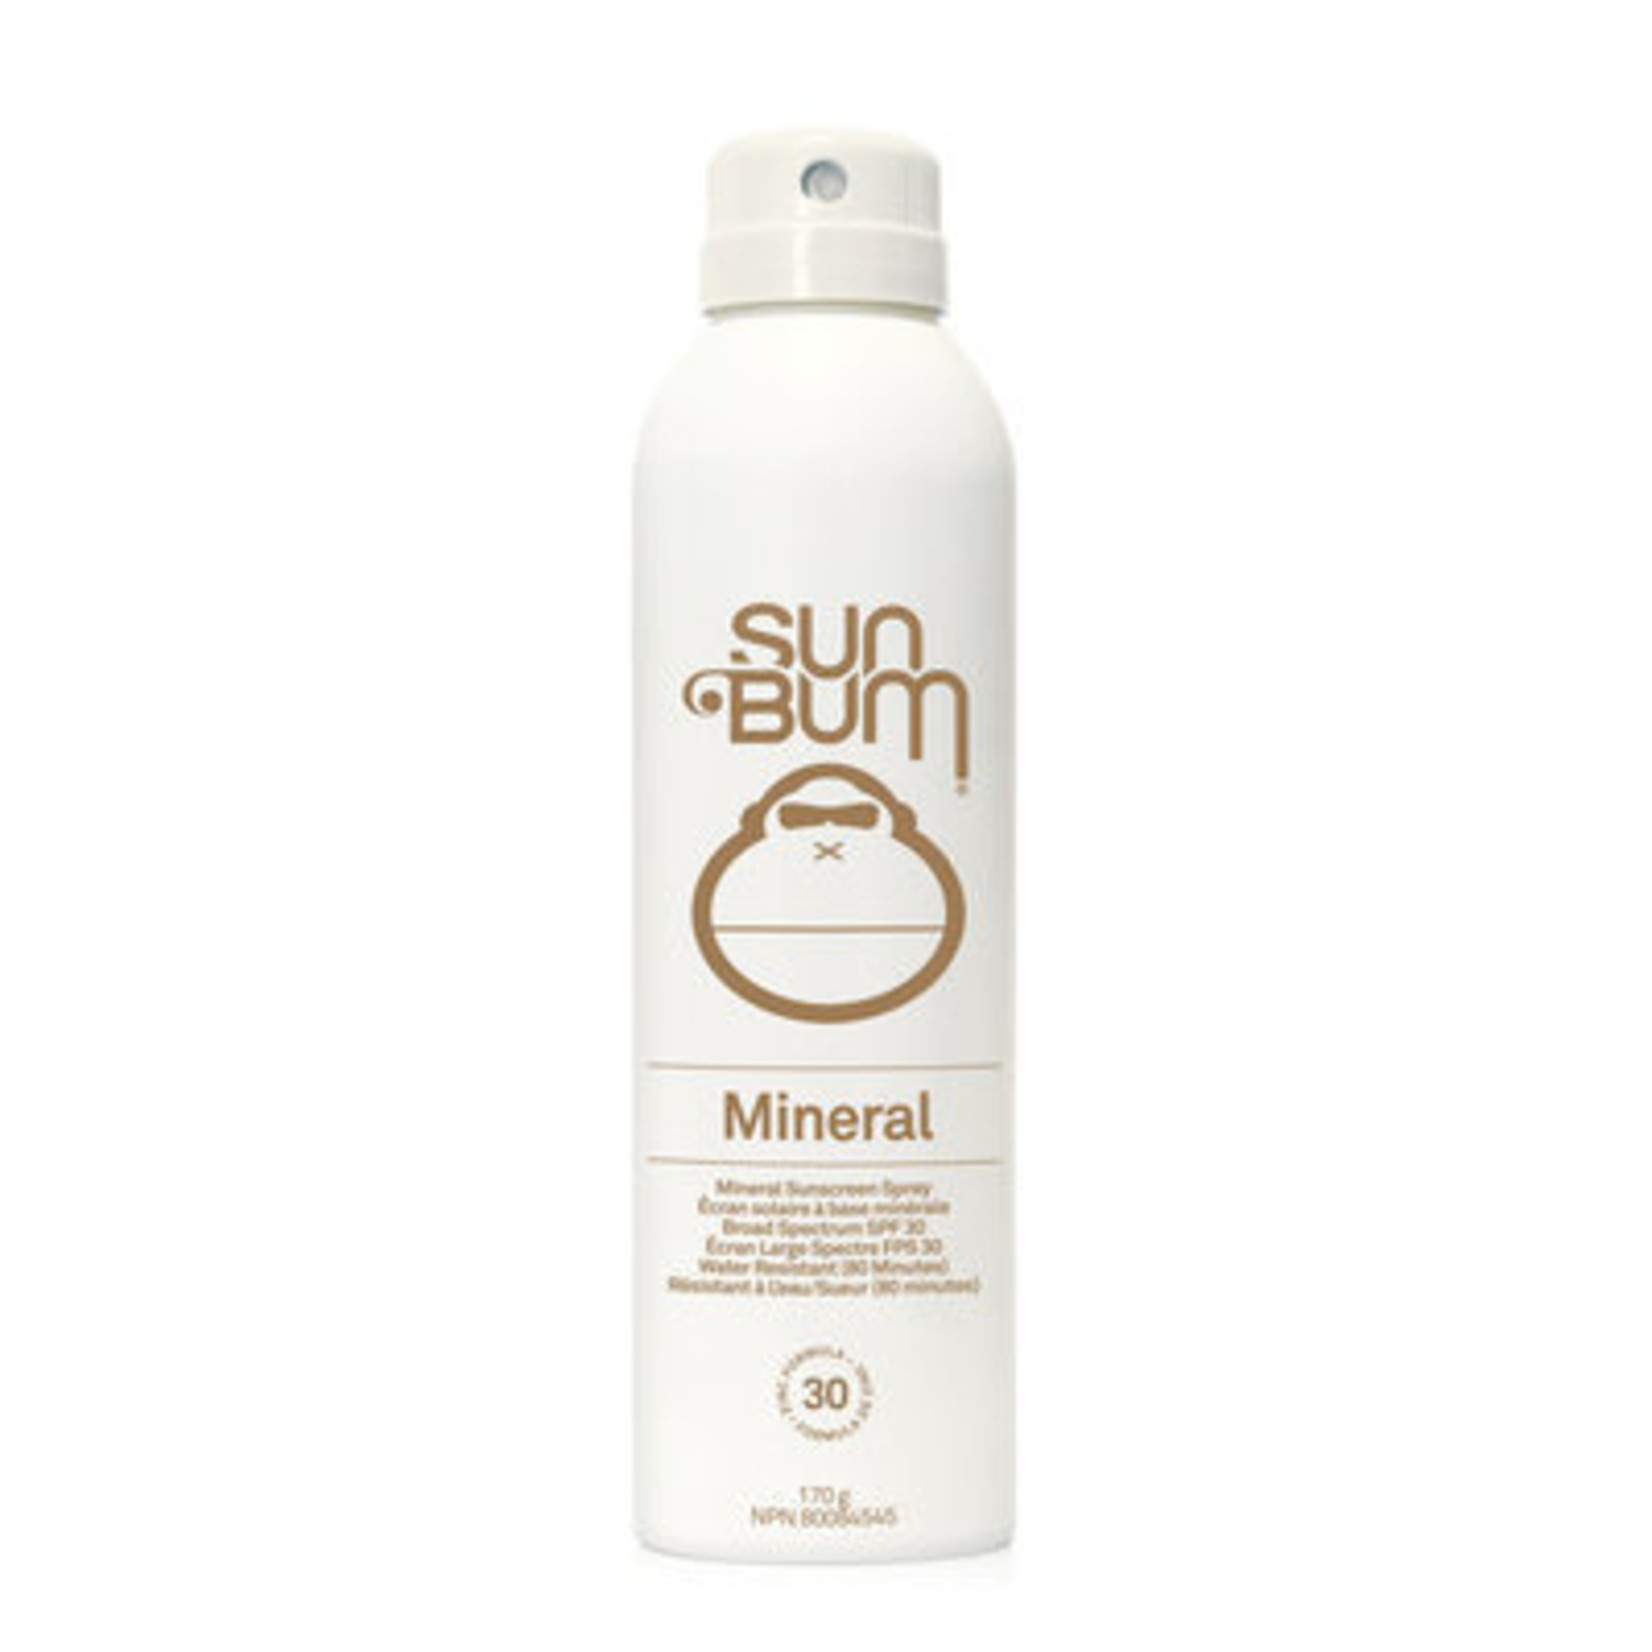 SUN BUM Mineral Sunscreen Spray SPF 30